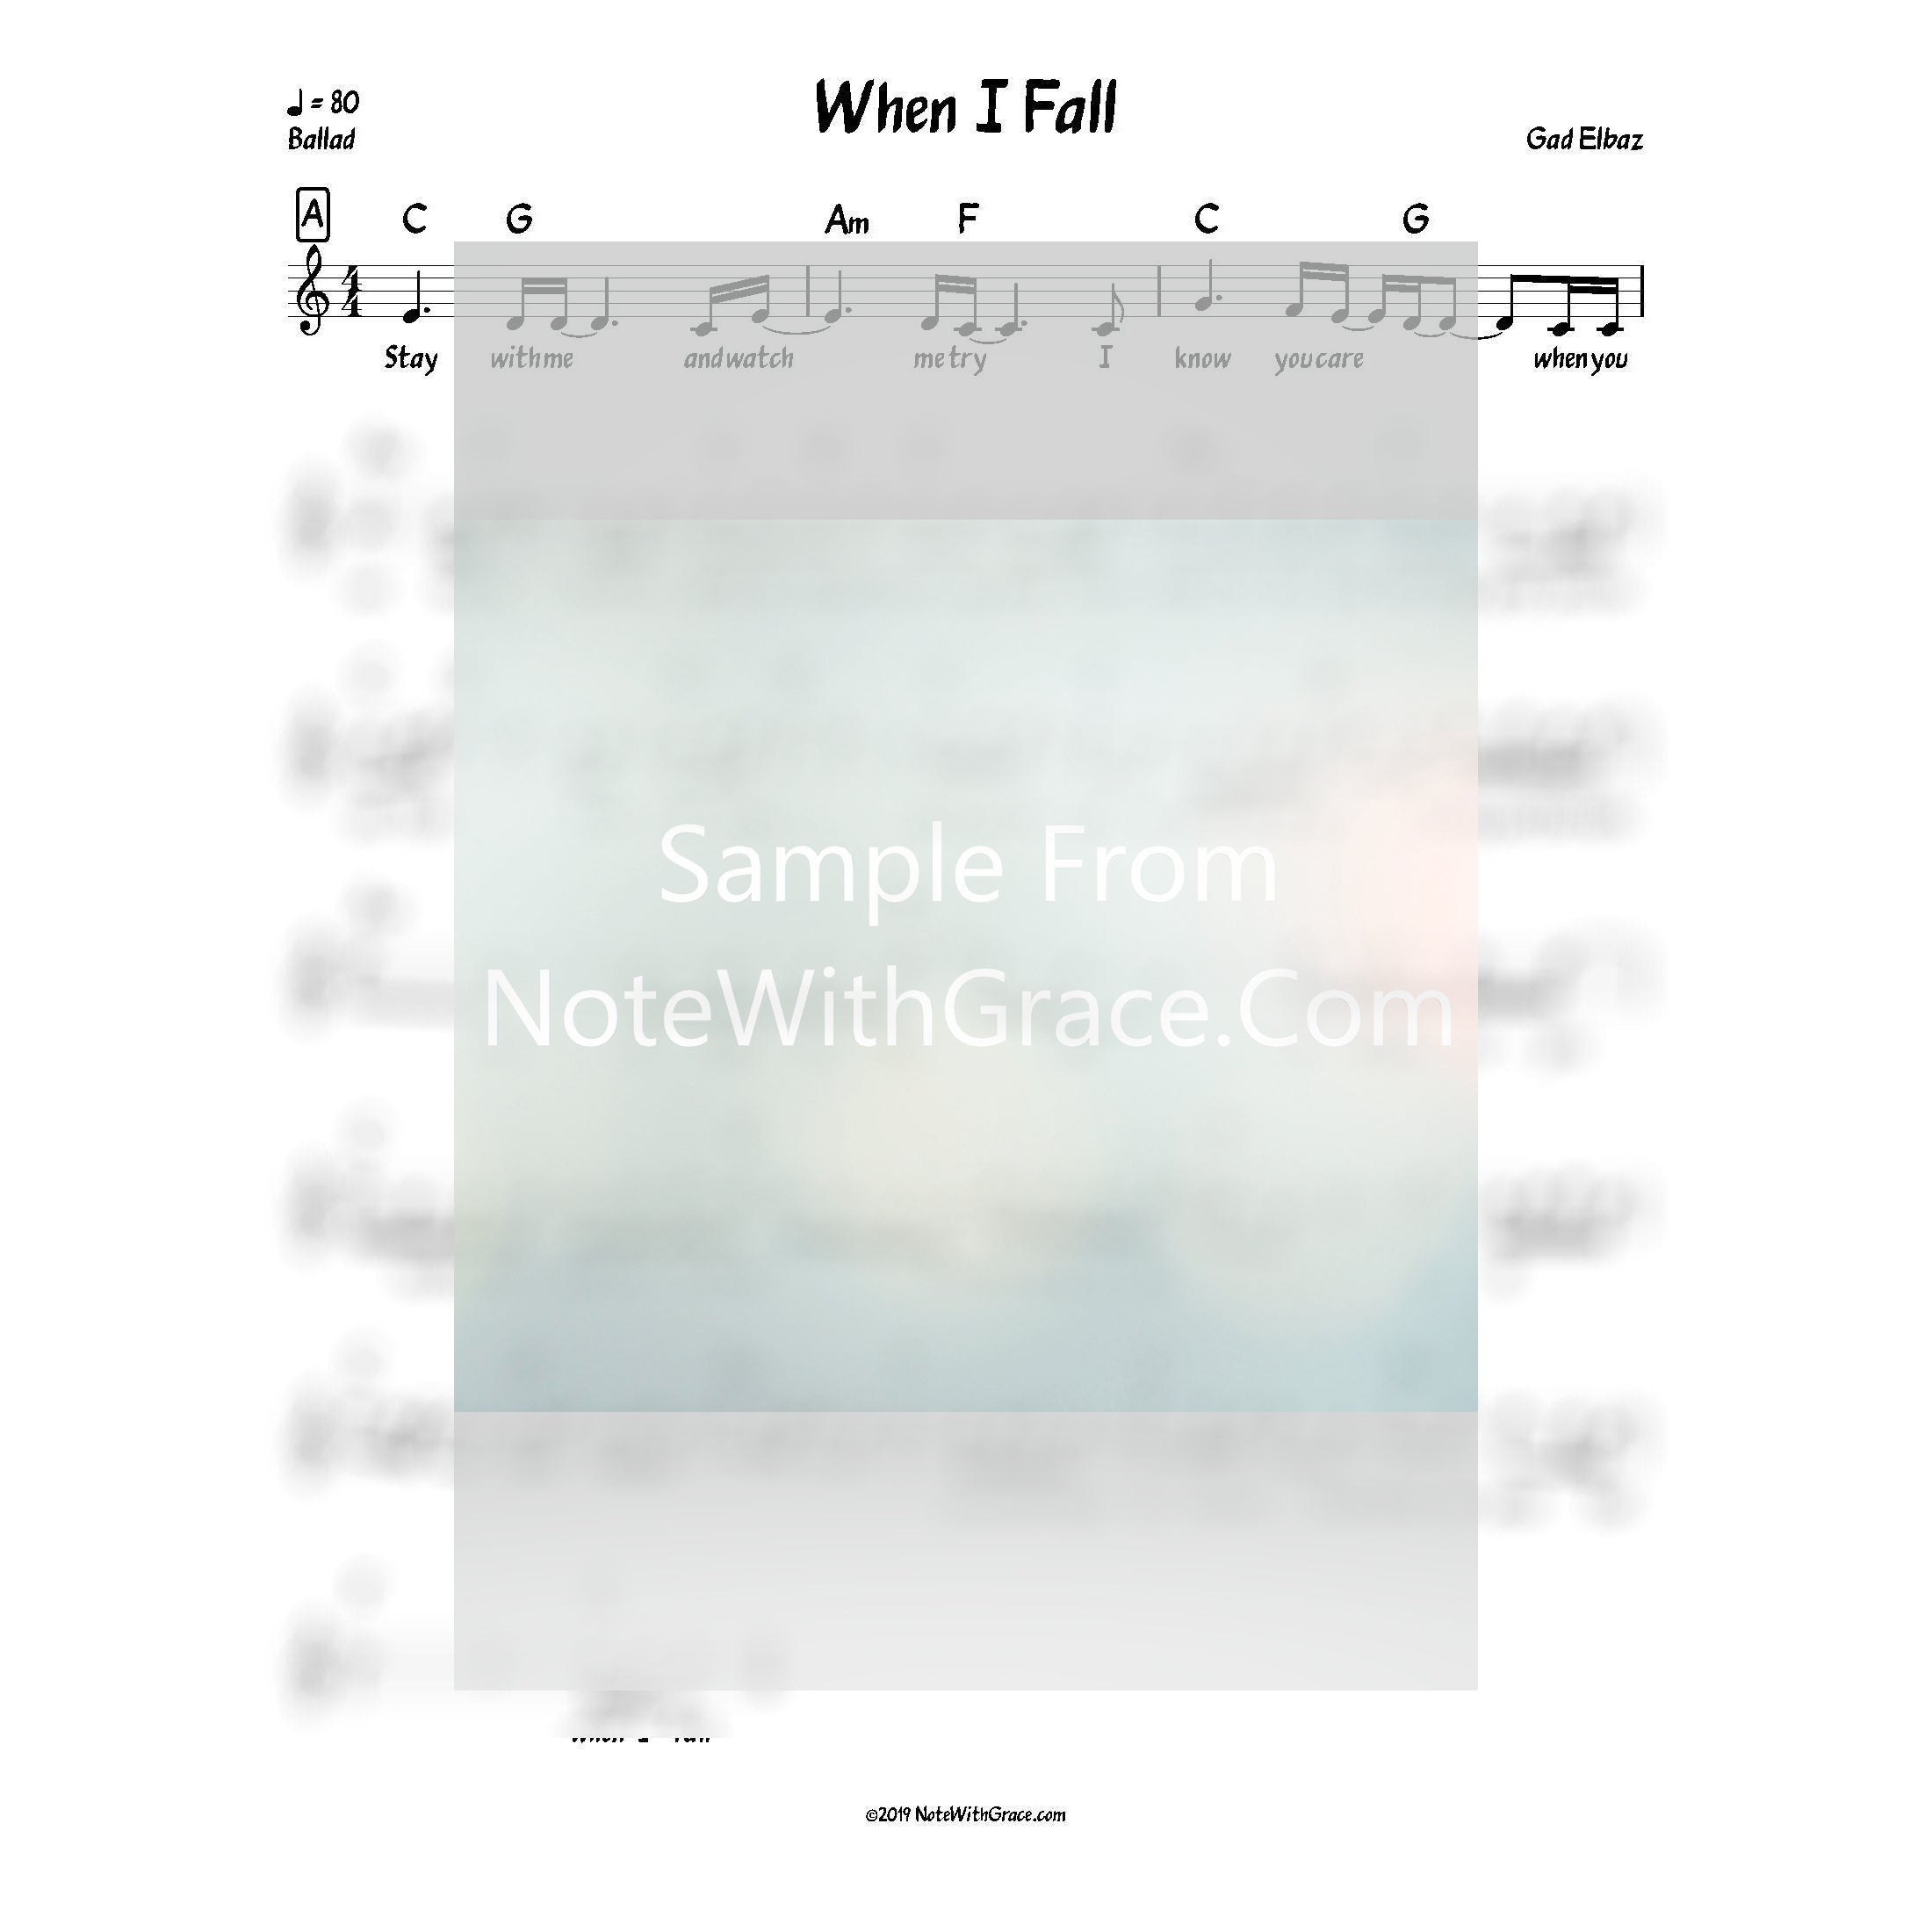 When I Fall Lead Sheet (Gad Elbaz) Album L'chaim Released 2017-Sheet music-NoteWithGrace.com